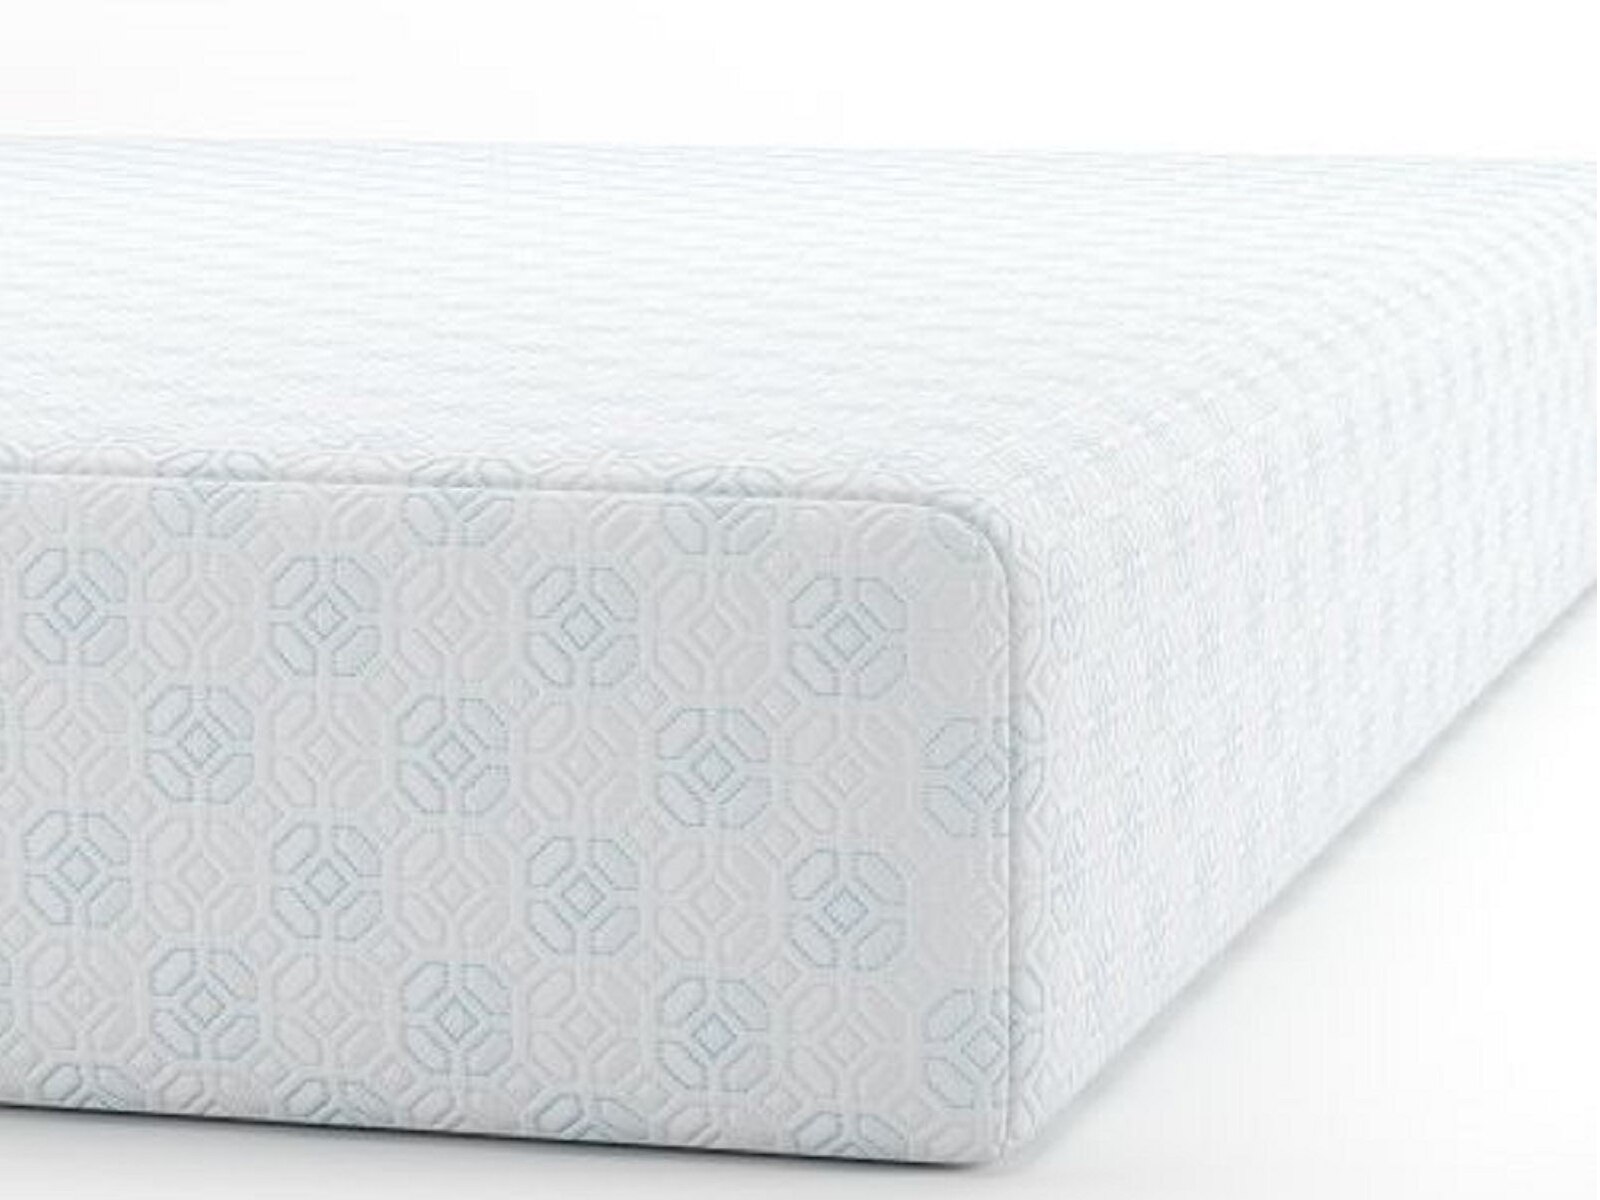 mygel memory foam mattress review